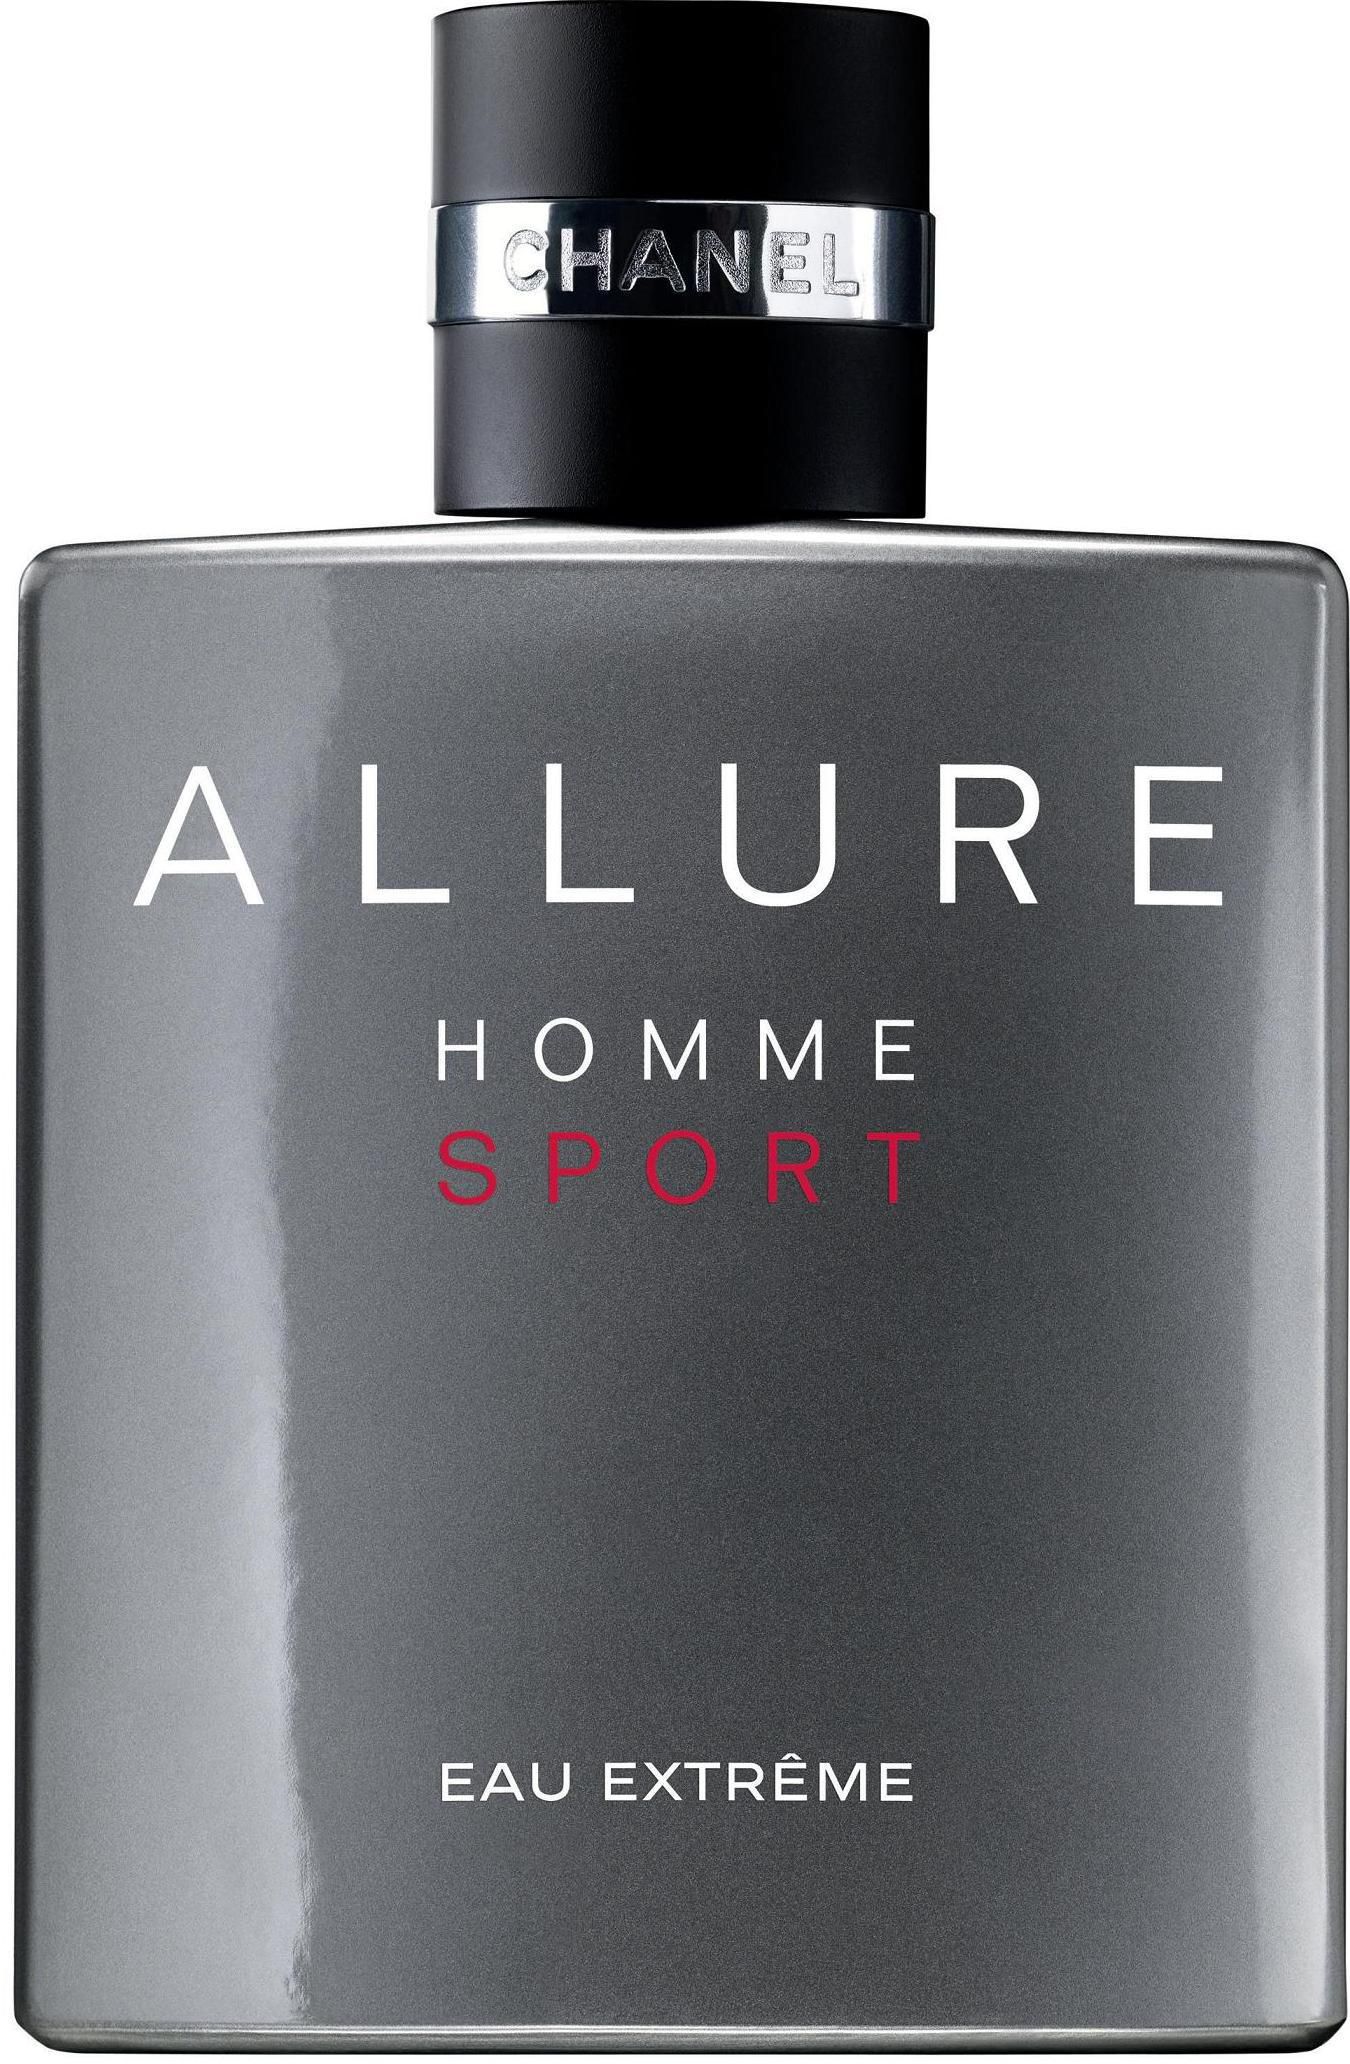 Allure Homme Sport Eau Extreme by Chanel Men EDP, 100ml - Order